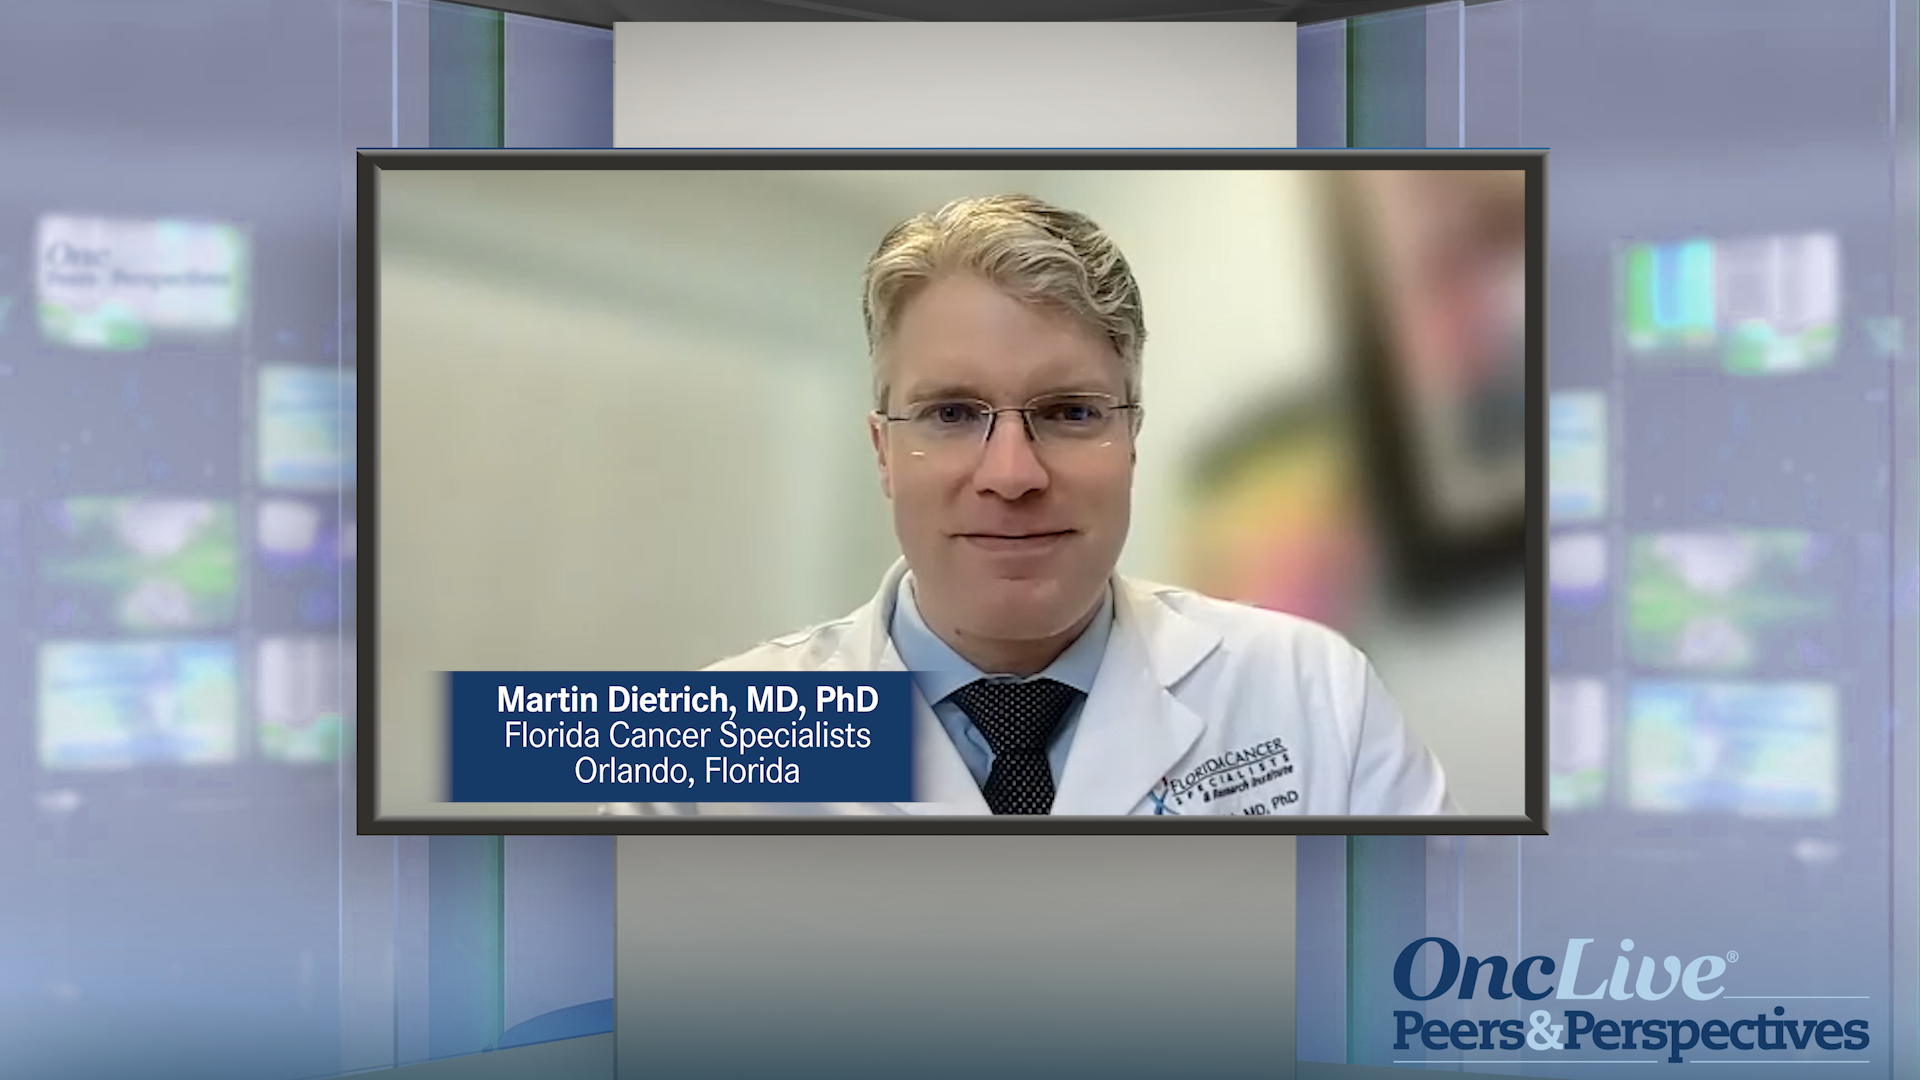 Martin Dietrich, MD, PhD, an expert on lung cancer